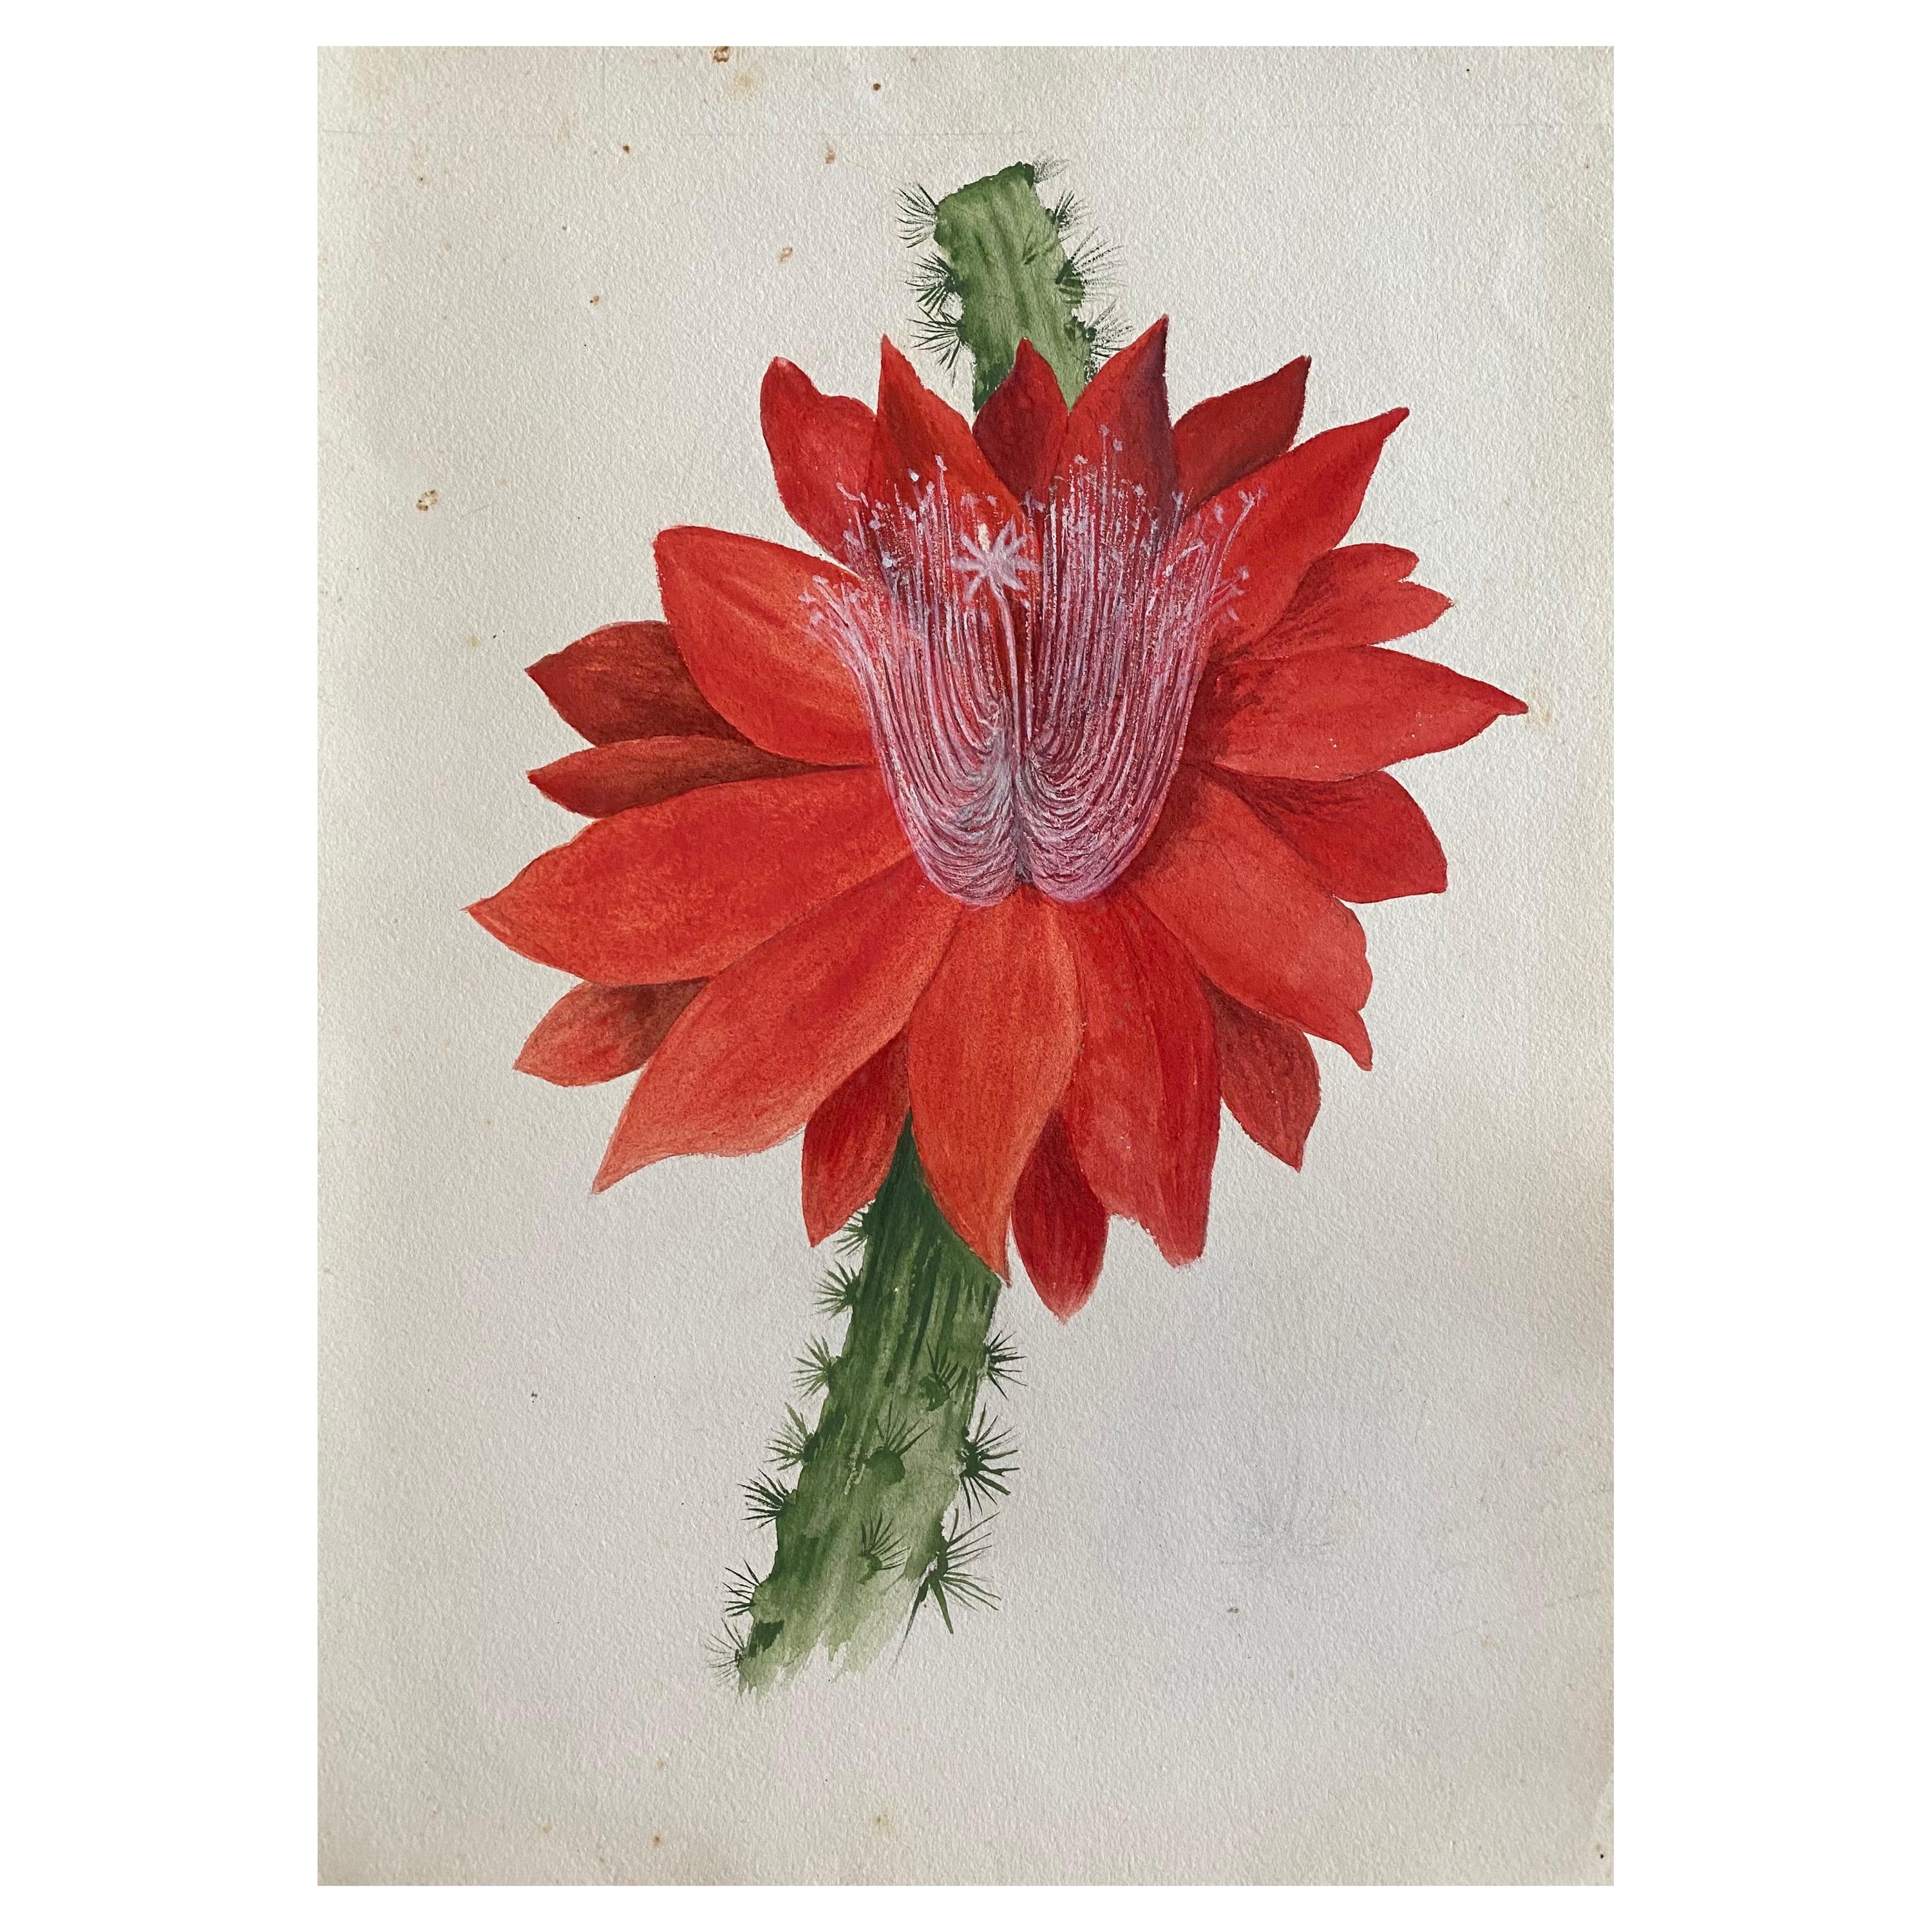 Antikes britisches Botanisches Aquarellgemälde mit roter Blume, um 1900